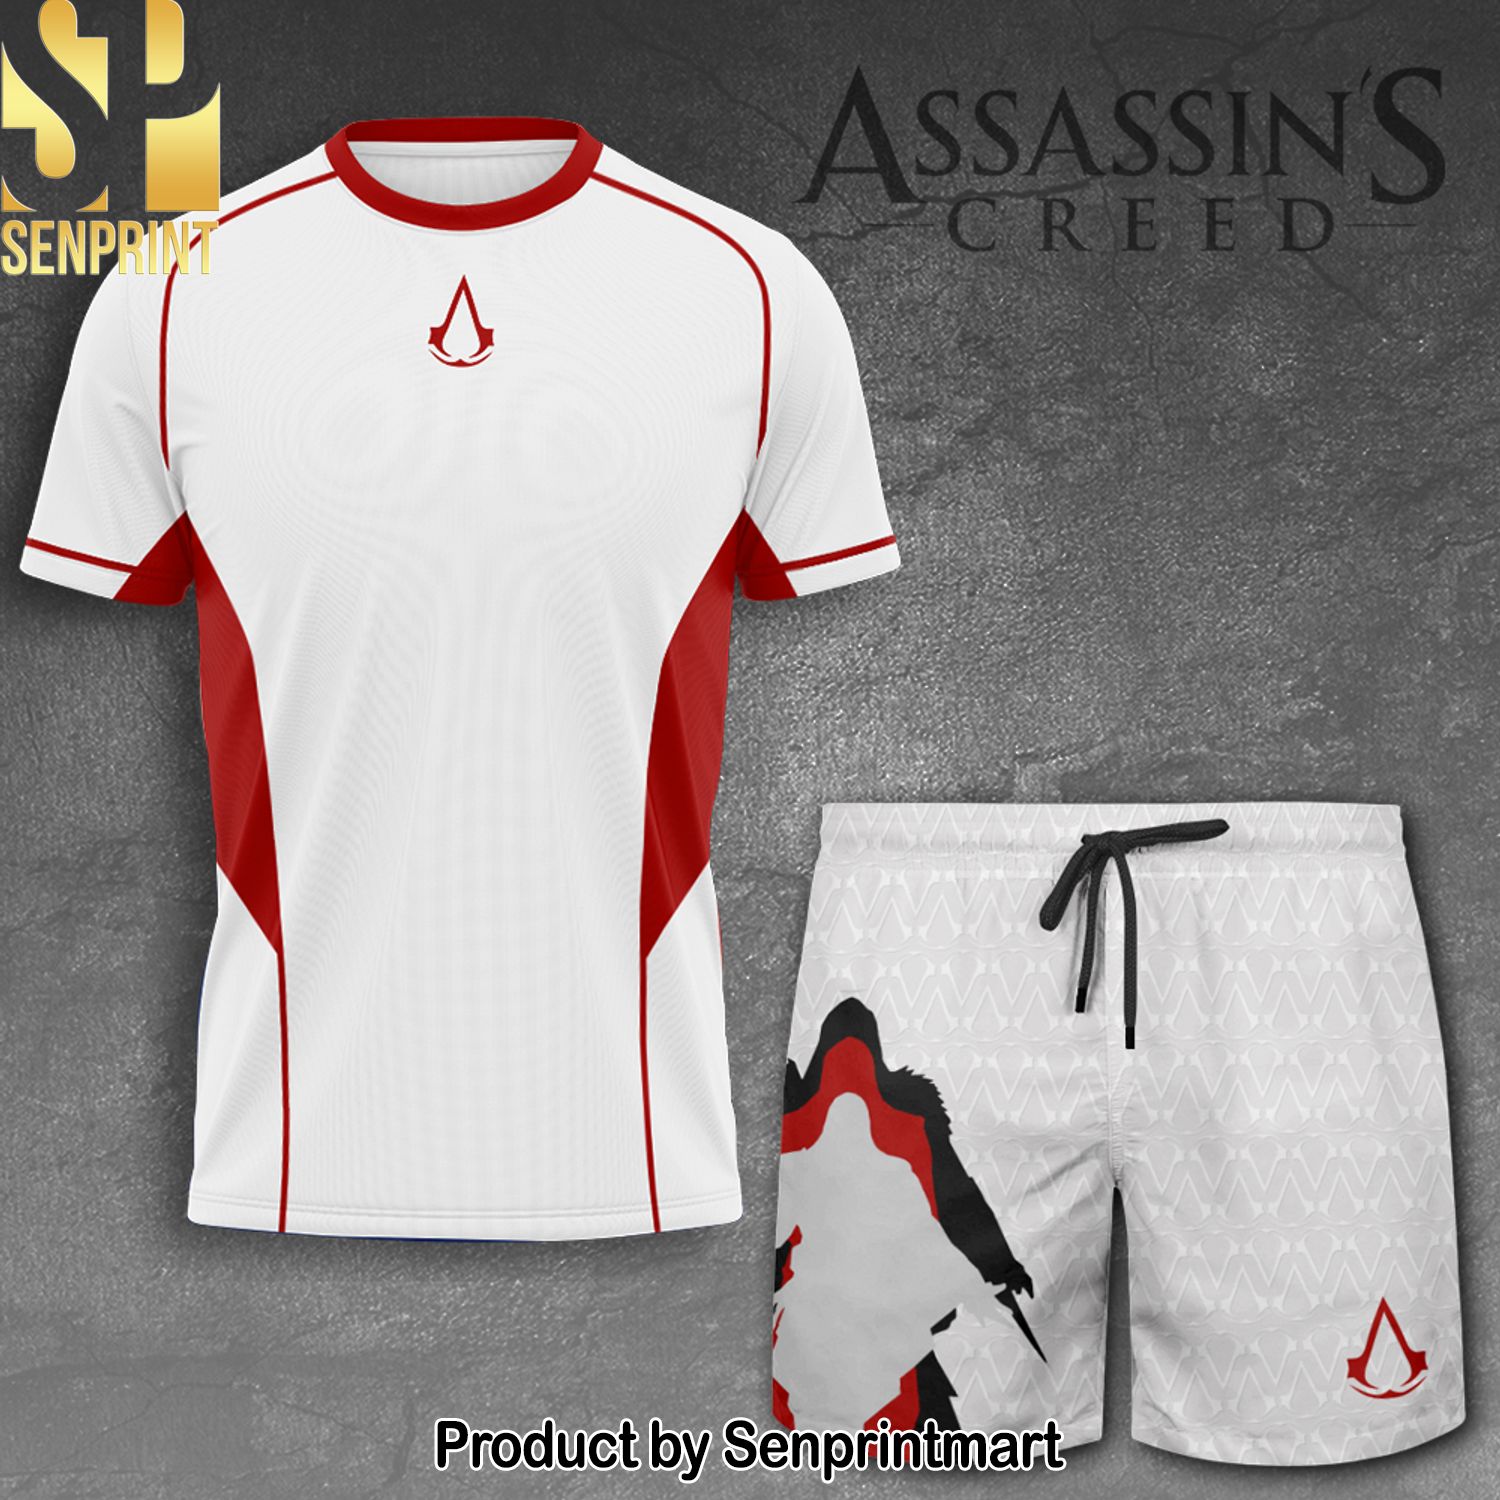 Assassin’s Creed Full Printing Shirt – SEN0233